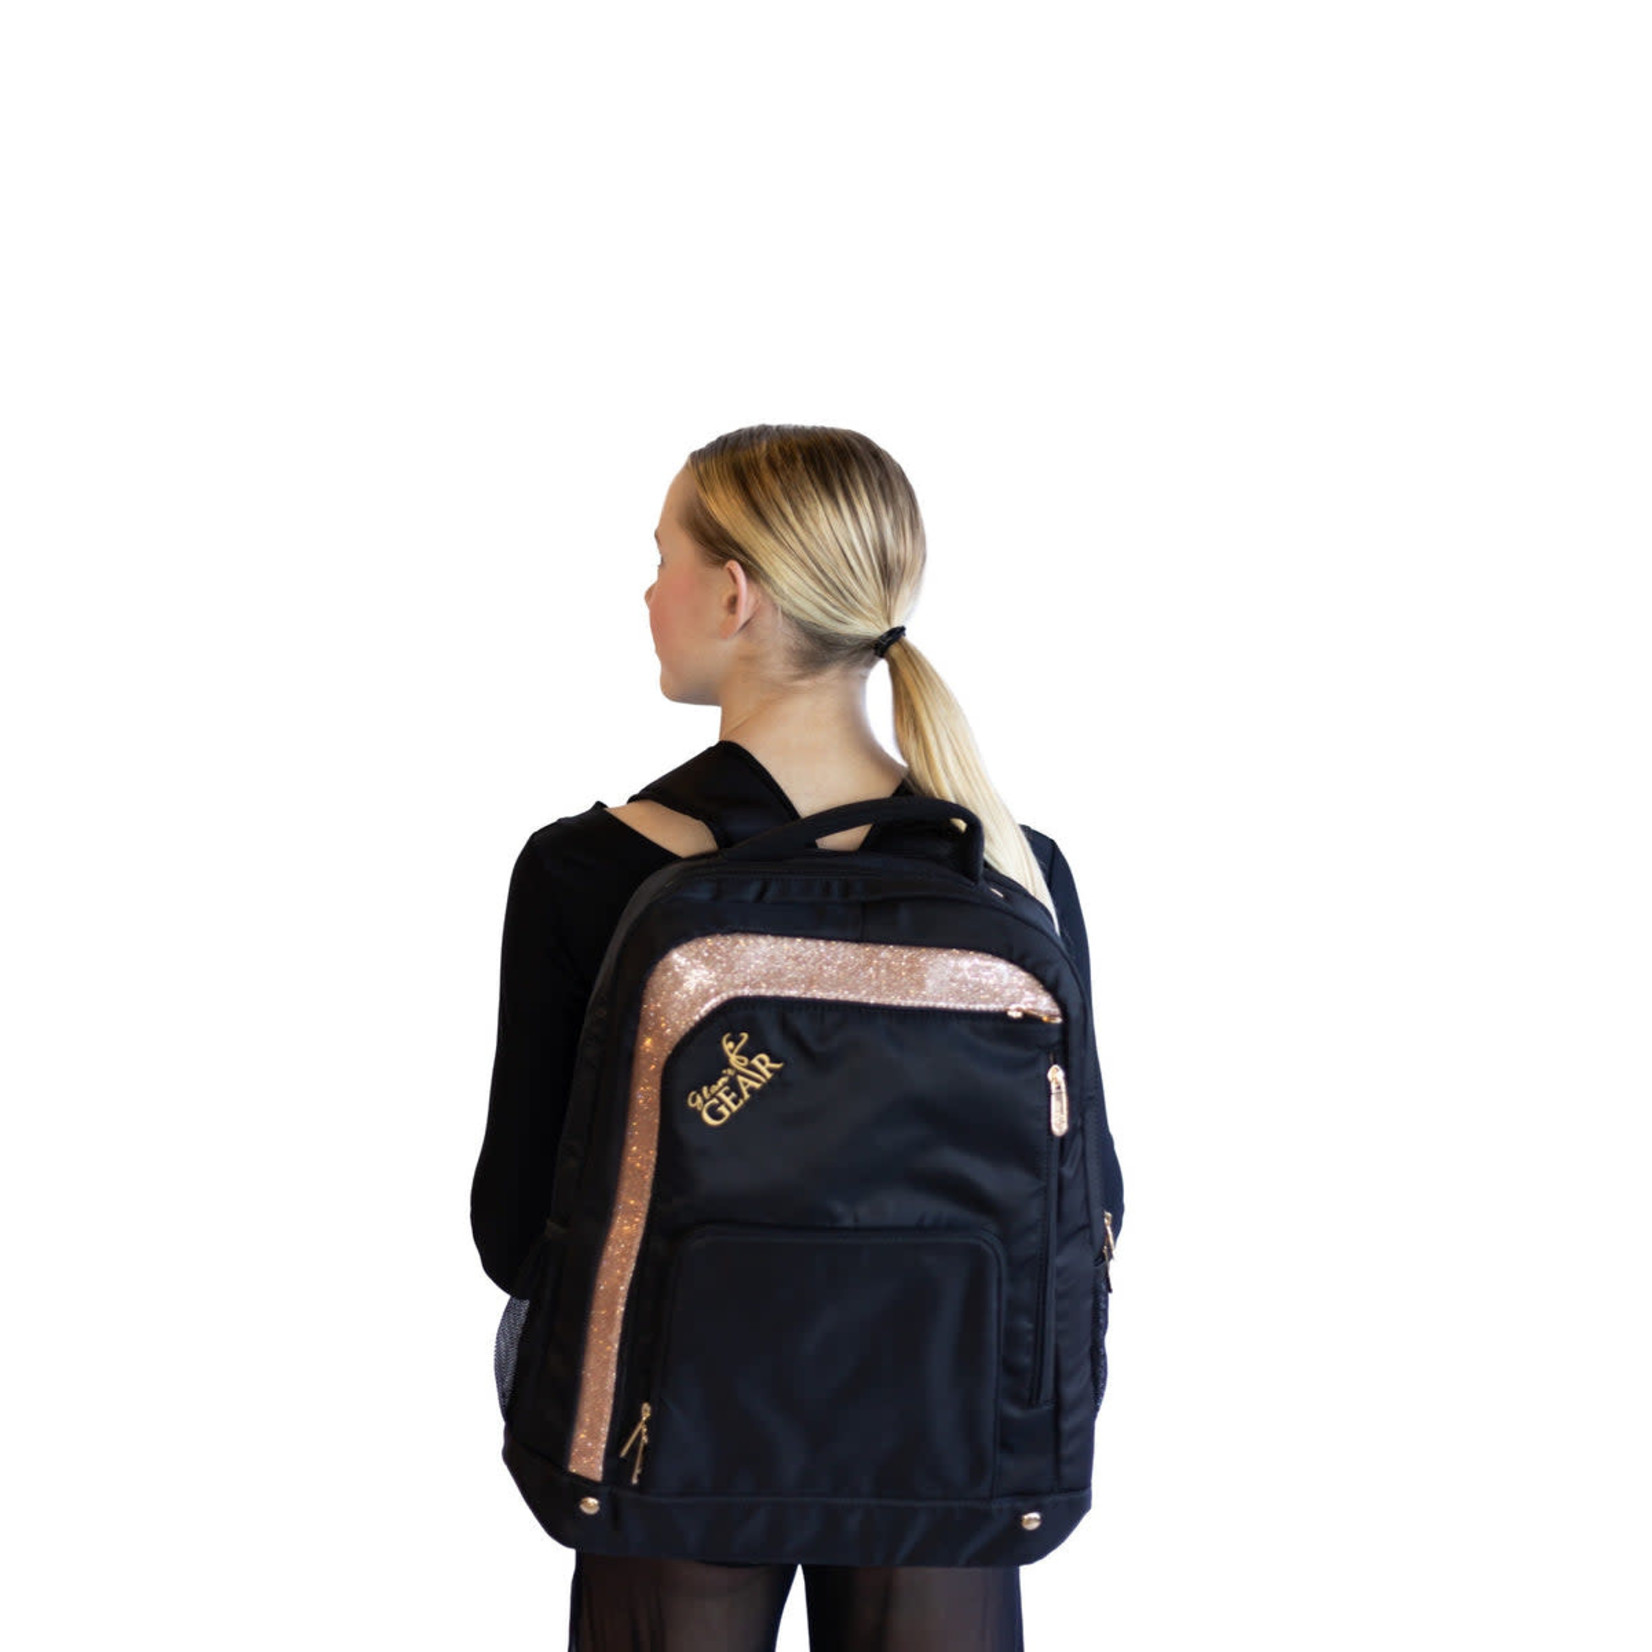 Glam'r Gear Backpack - All the Dancewear - by Etoile Dancewear